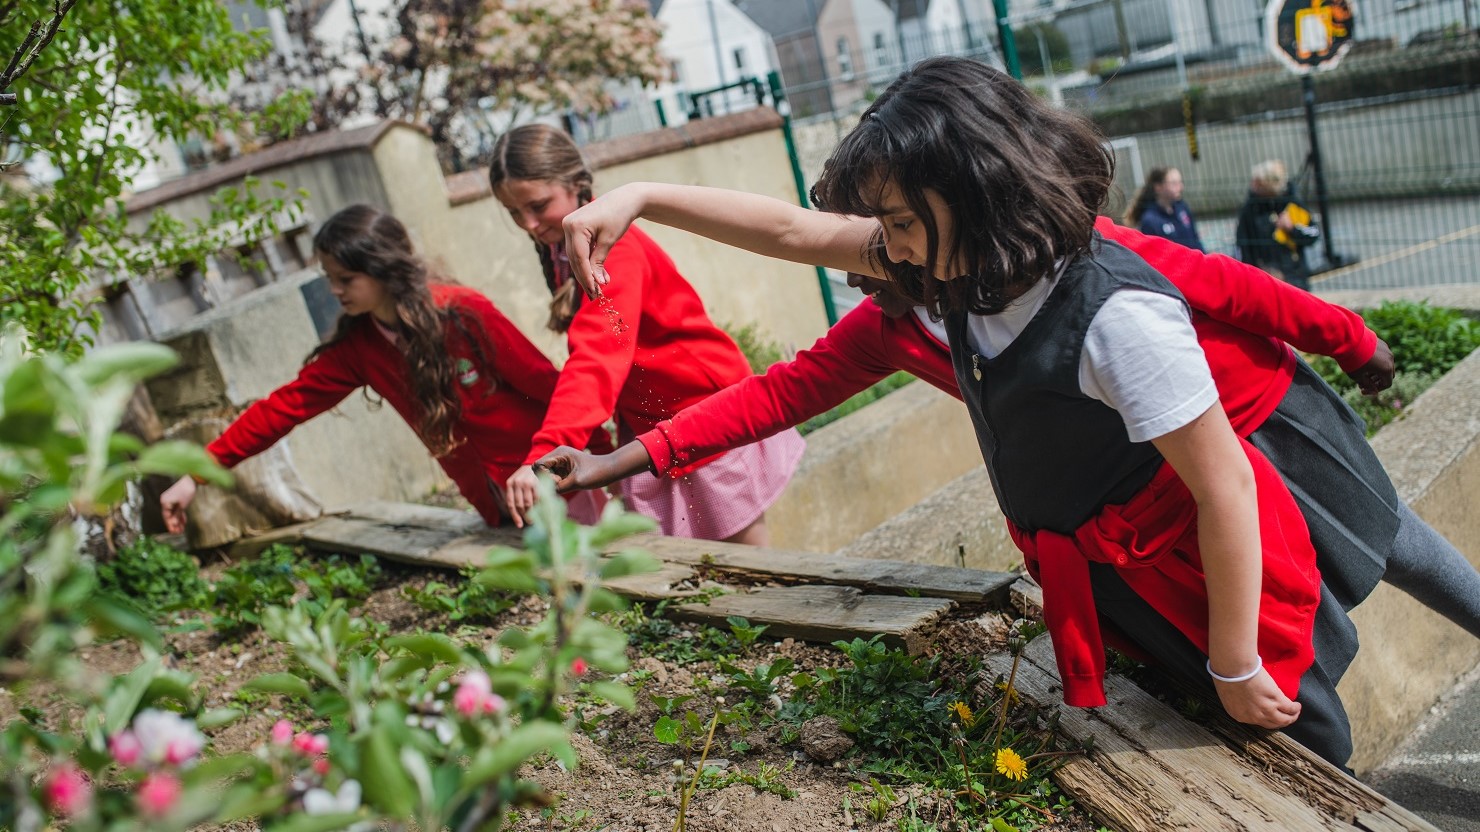 School children plant sees in a small garden area